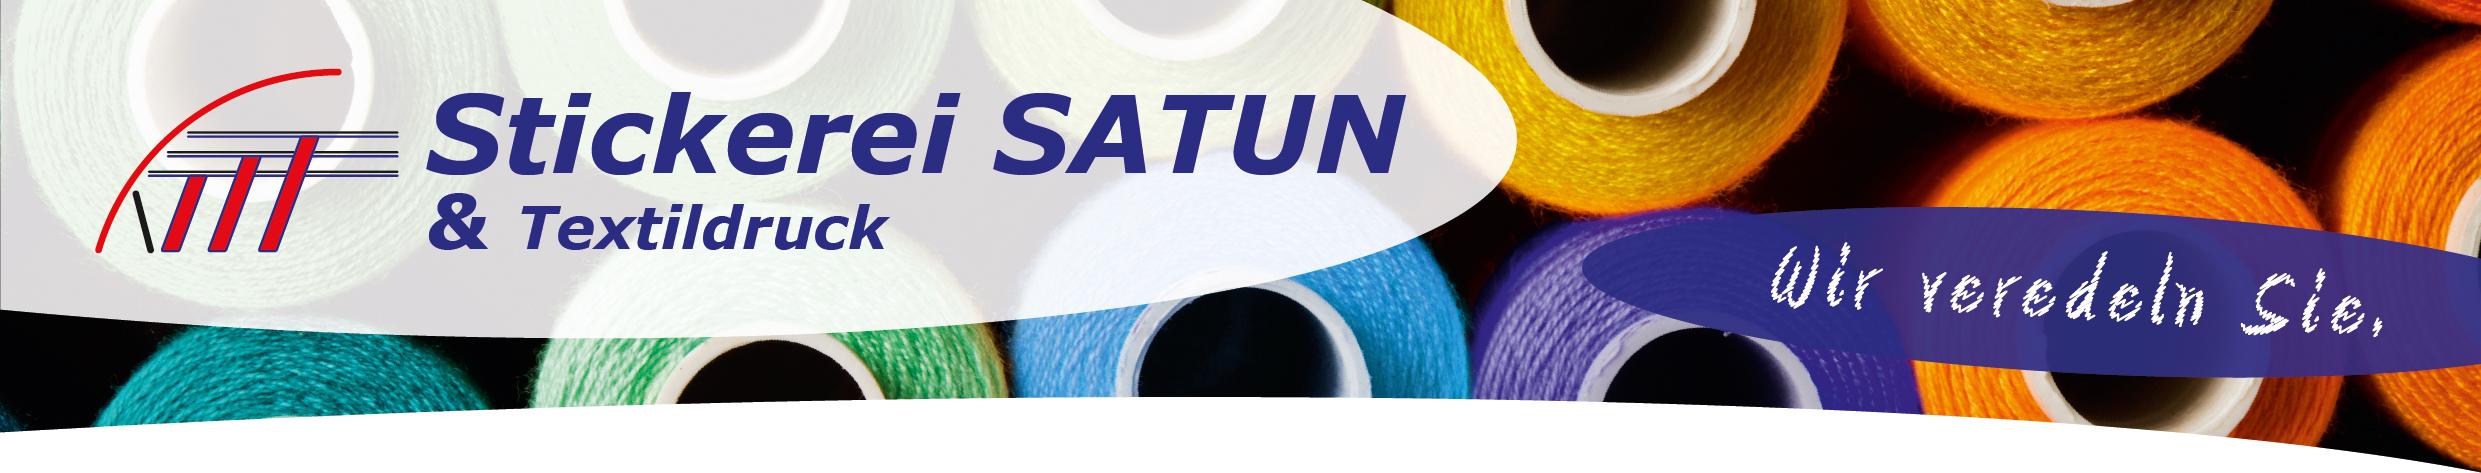 Logo Stickerei SATUN & Textildruck